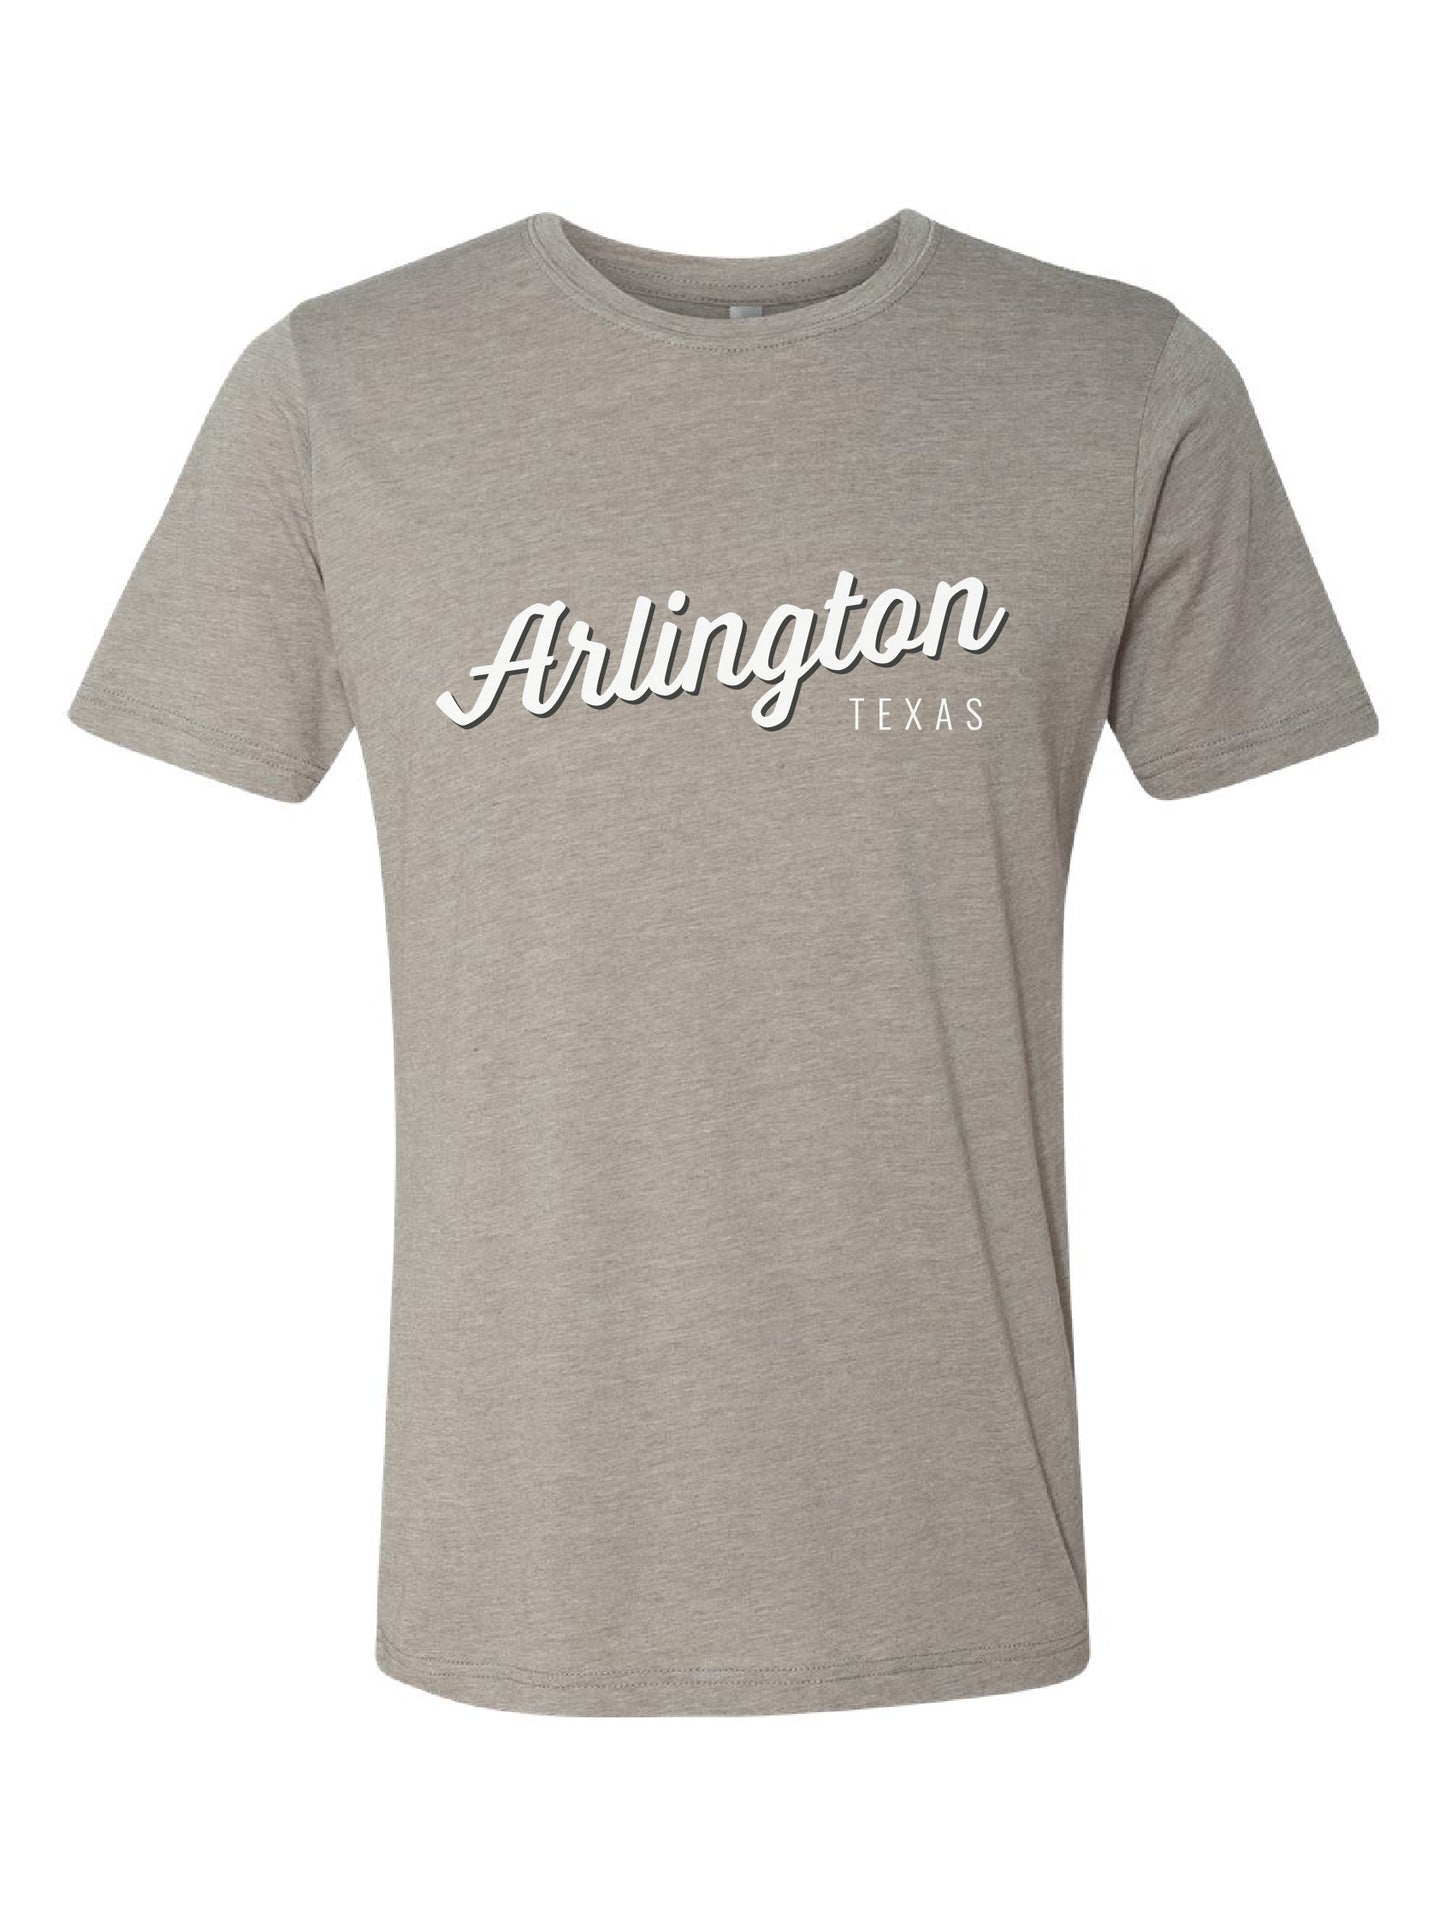 The 1876 - Arlington, TX Tee